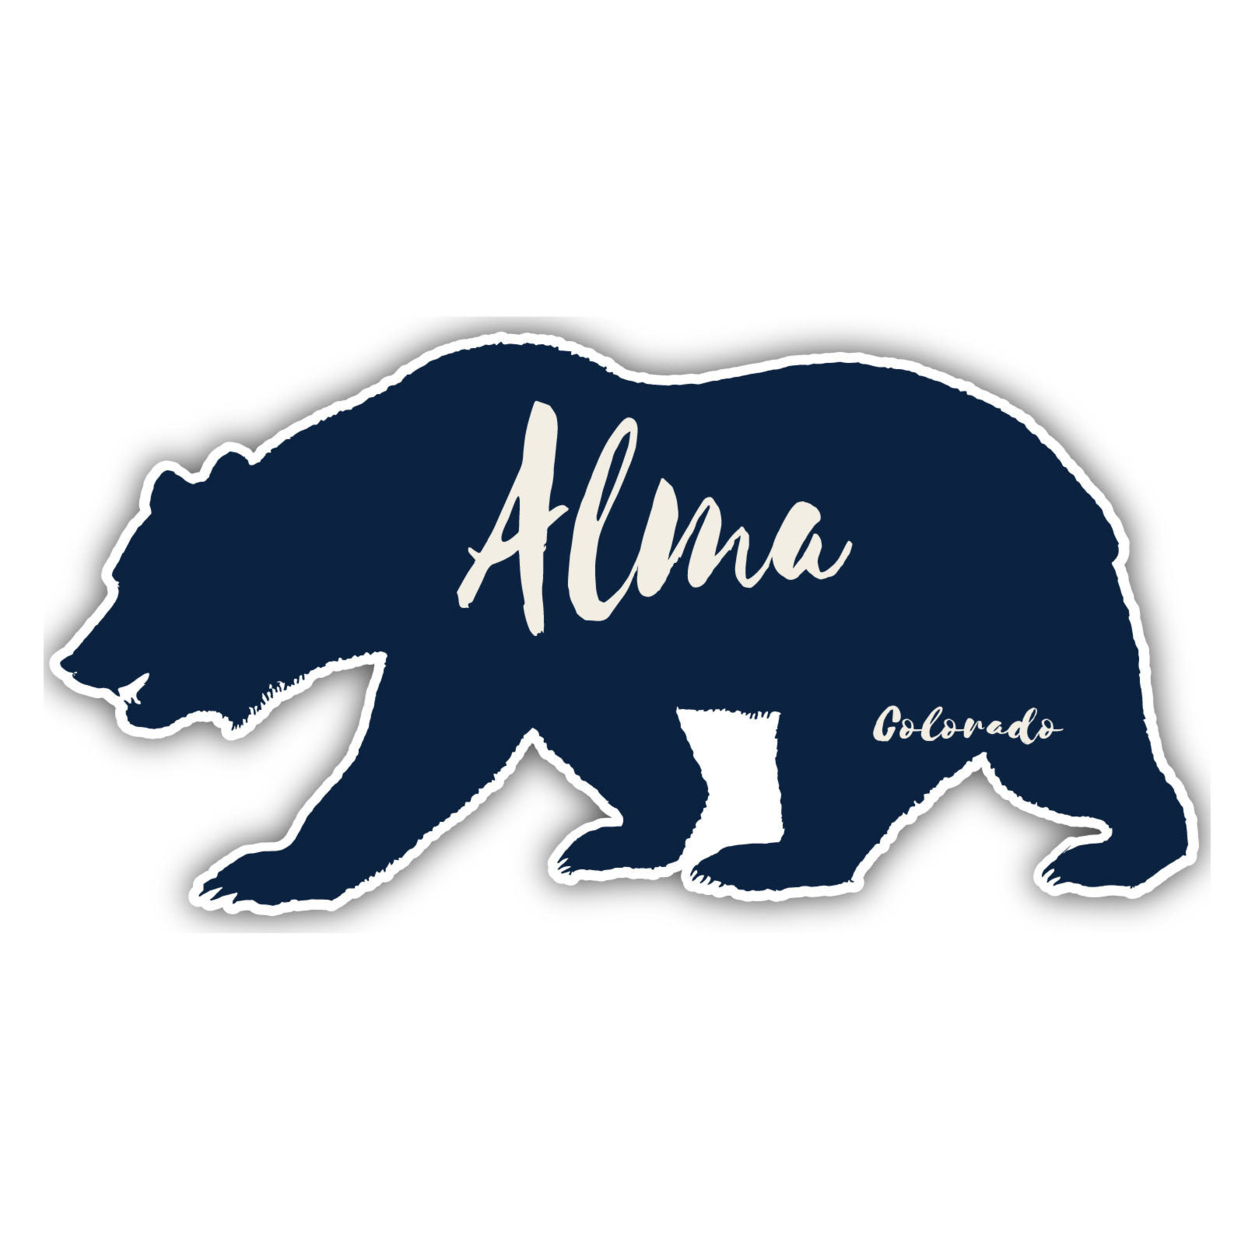 Alma Colorado Souvenir Decorative Stickers (Choose Theme And Size) - 4-Pack, 2-Inch, Bear